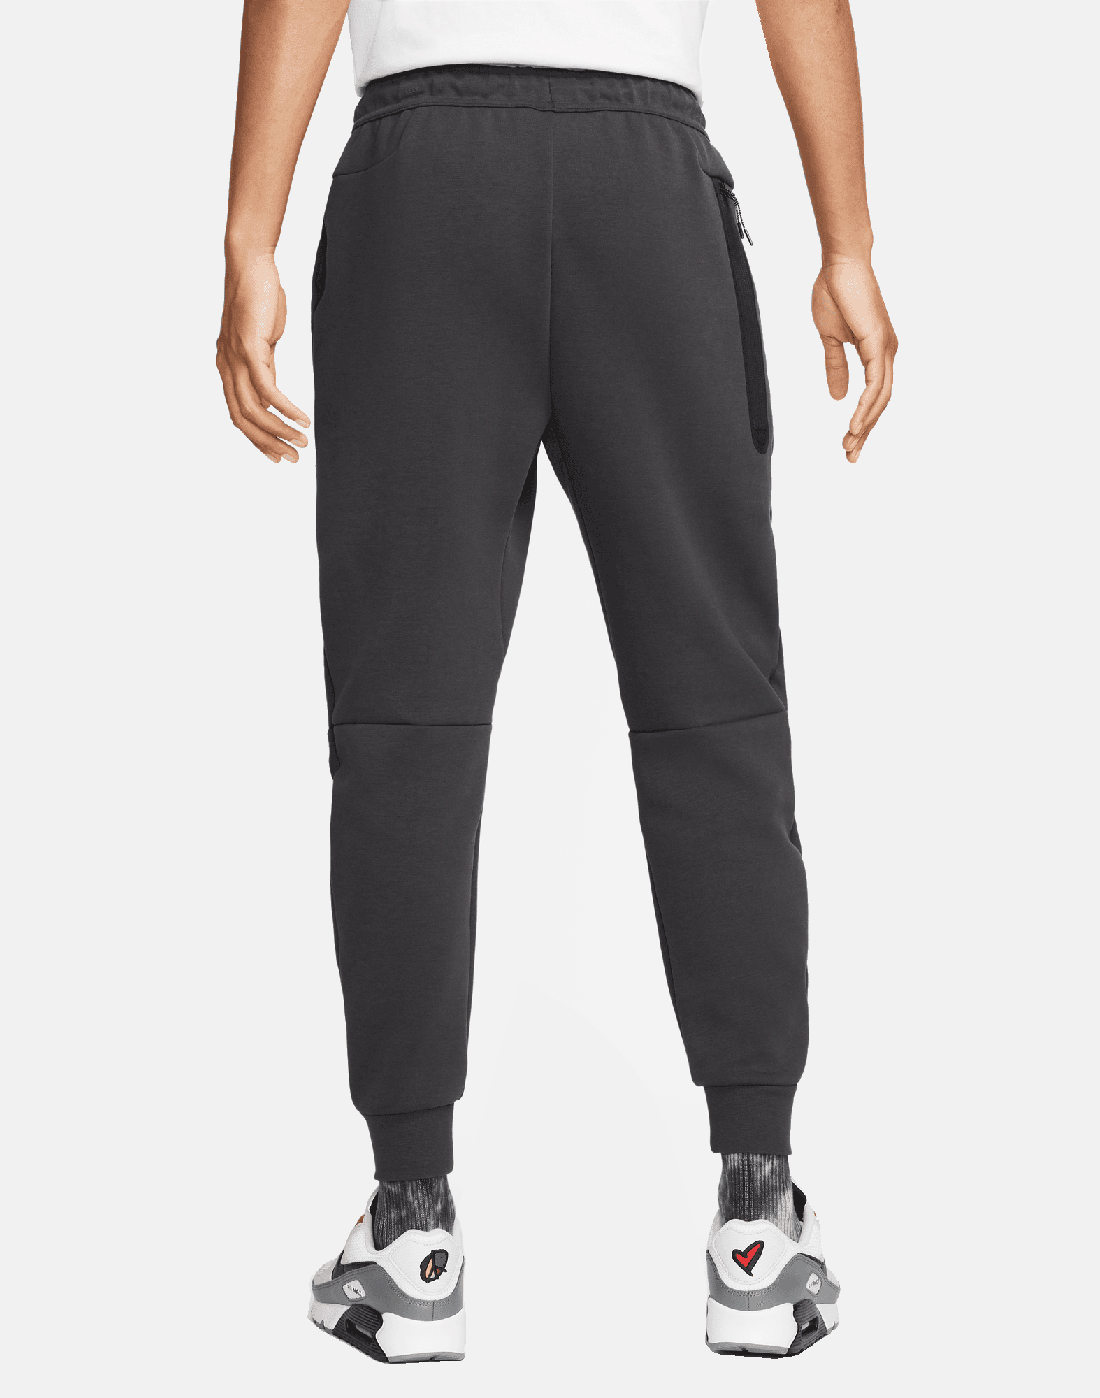 Nike Mens Tech Fleece Pants - Grey | Life Style Sports UK